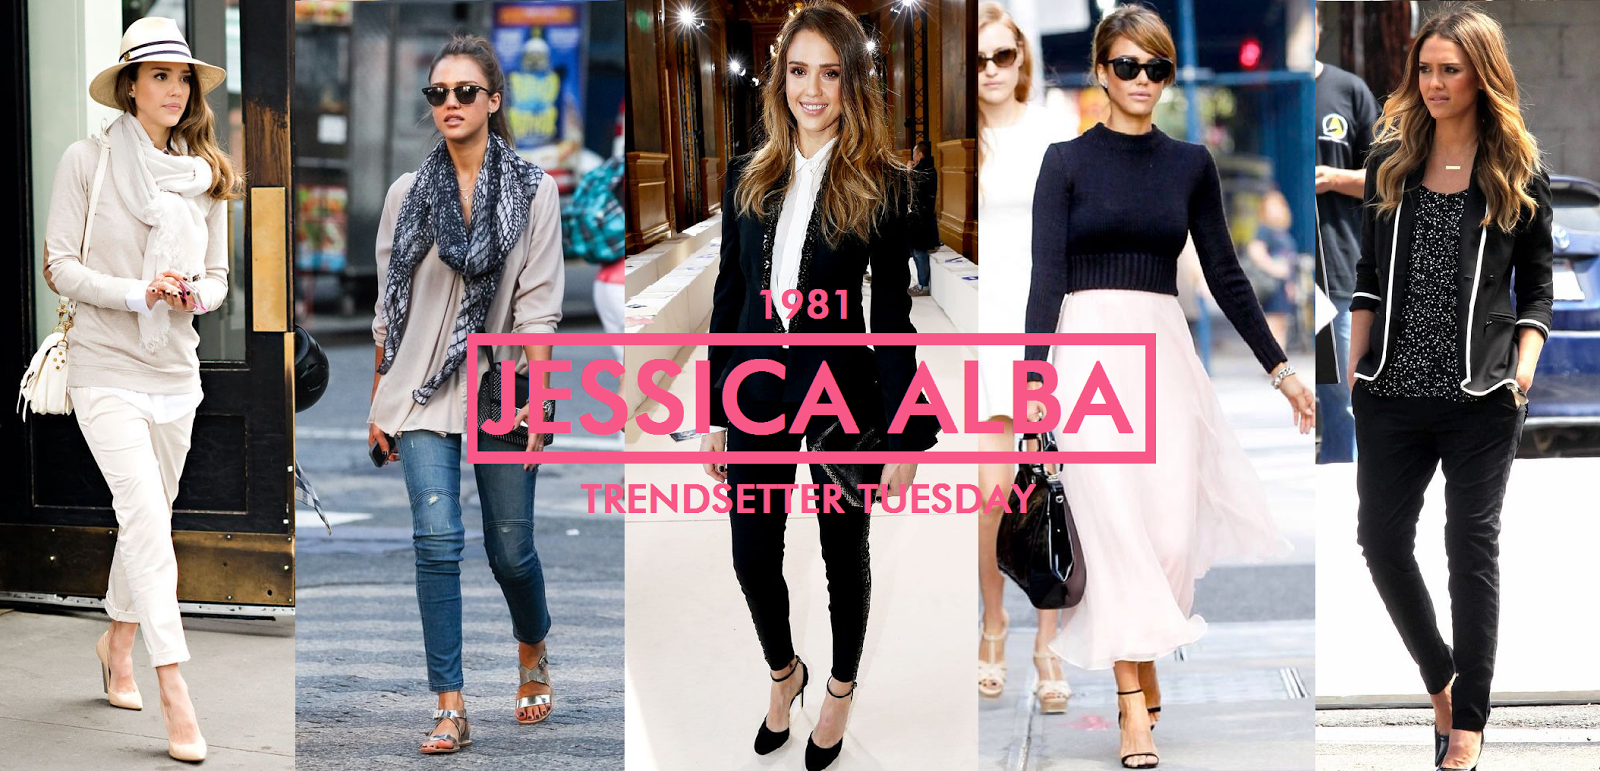 TRENDSETTER TUESDAY: JESSICA ALBA  Alright Sunshine - UK Fashion,  Lifestyle, Travel & Entertainment Blog